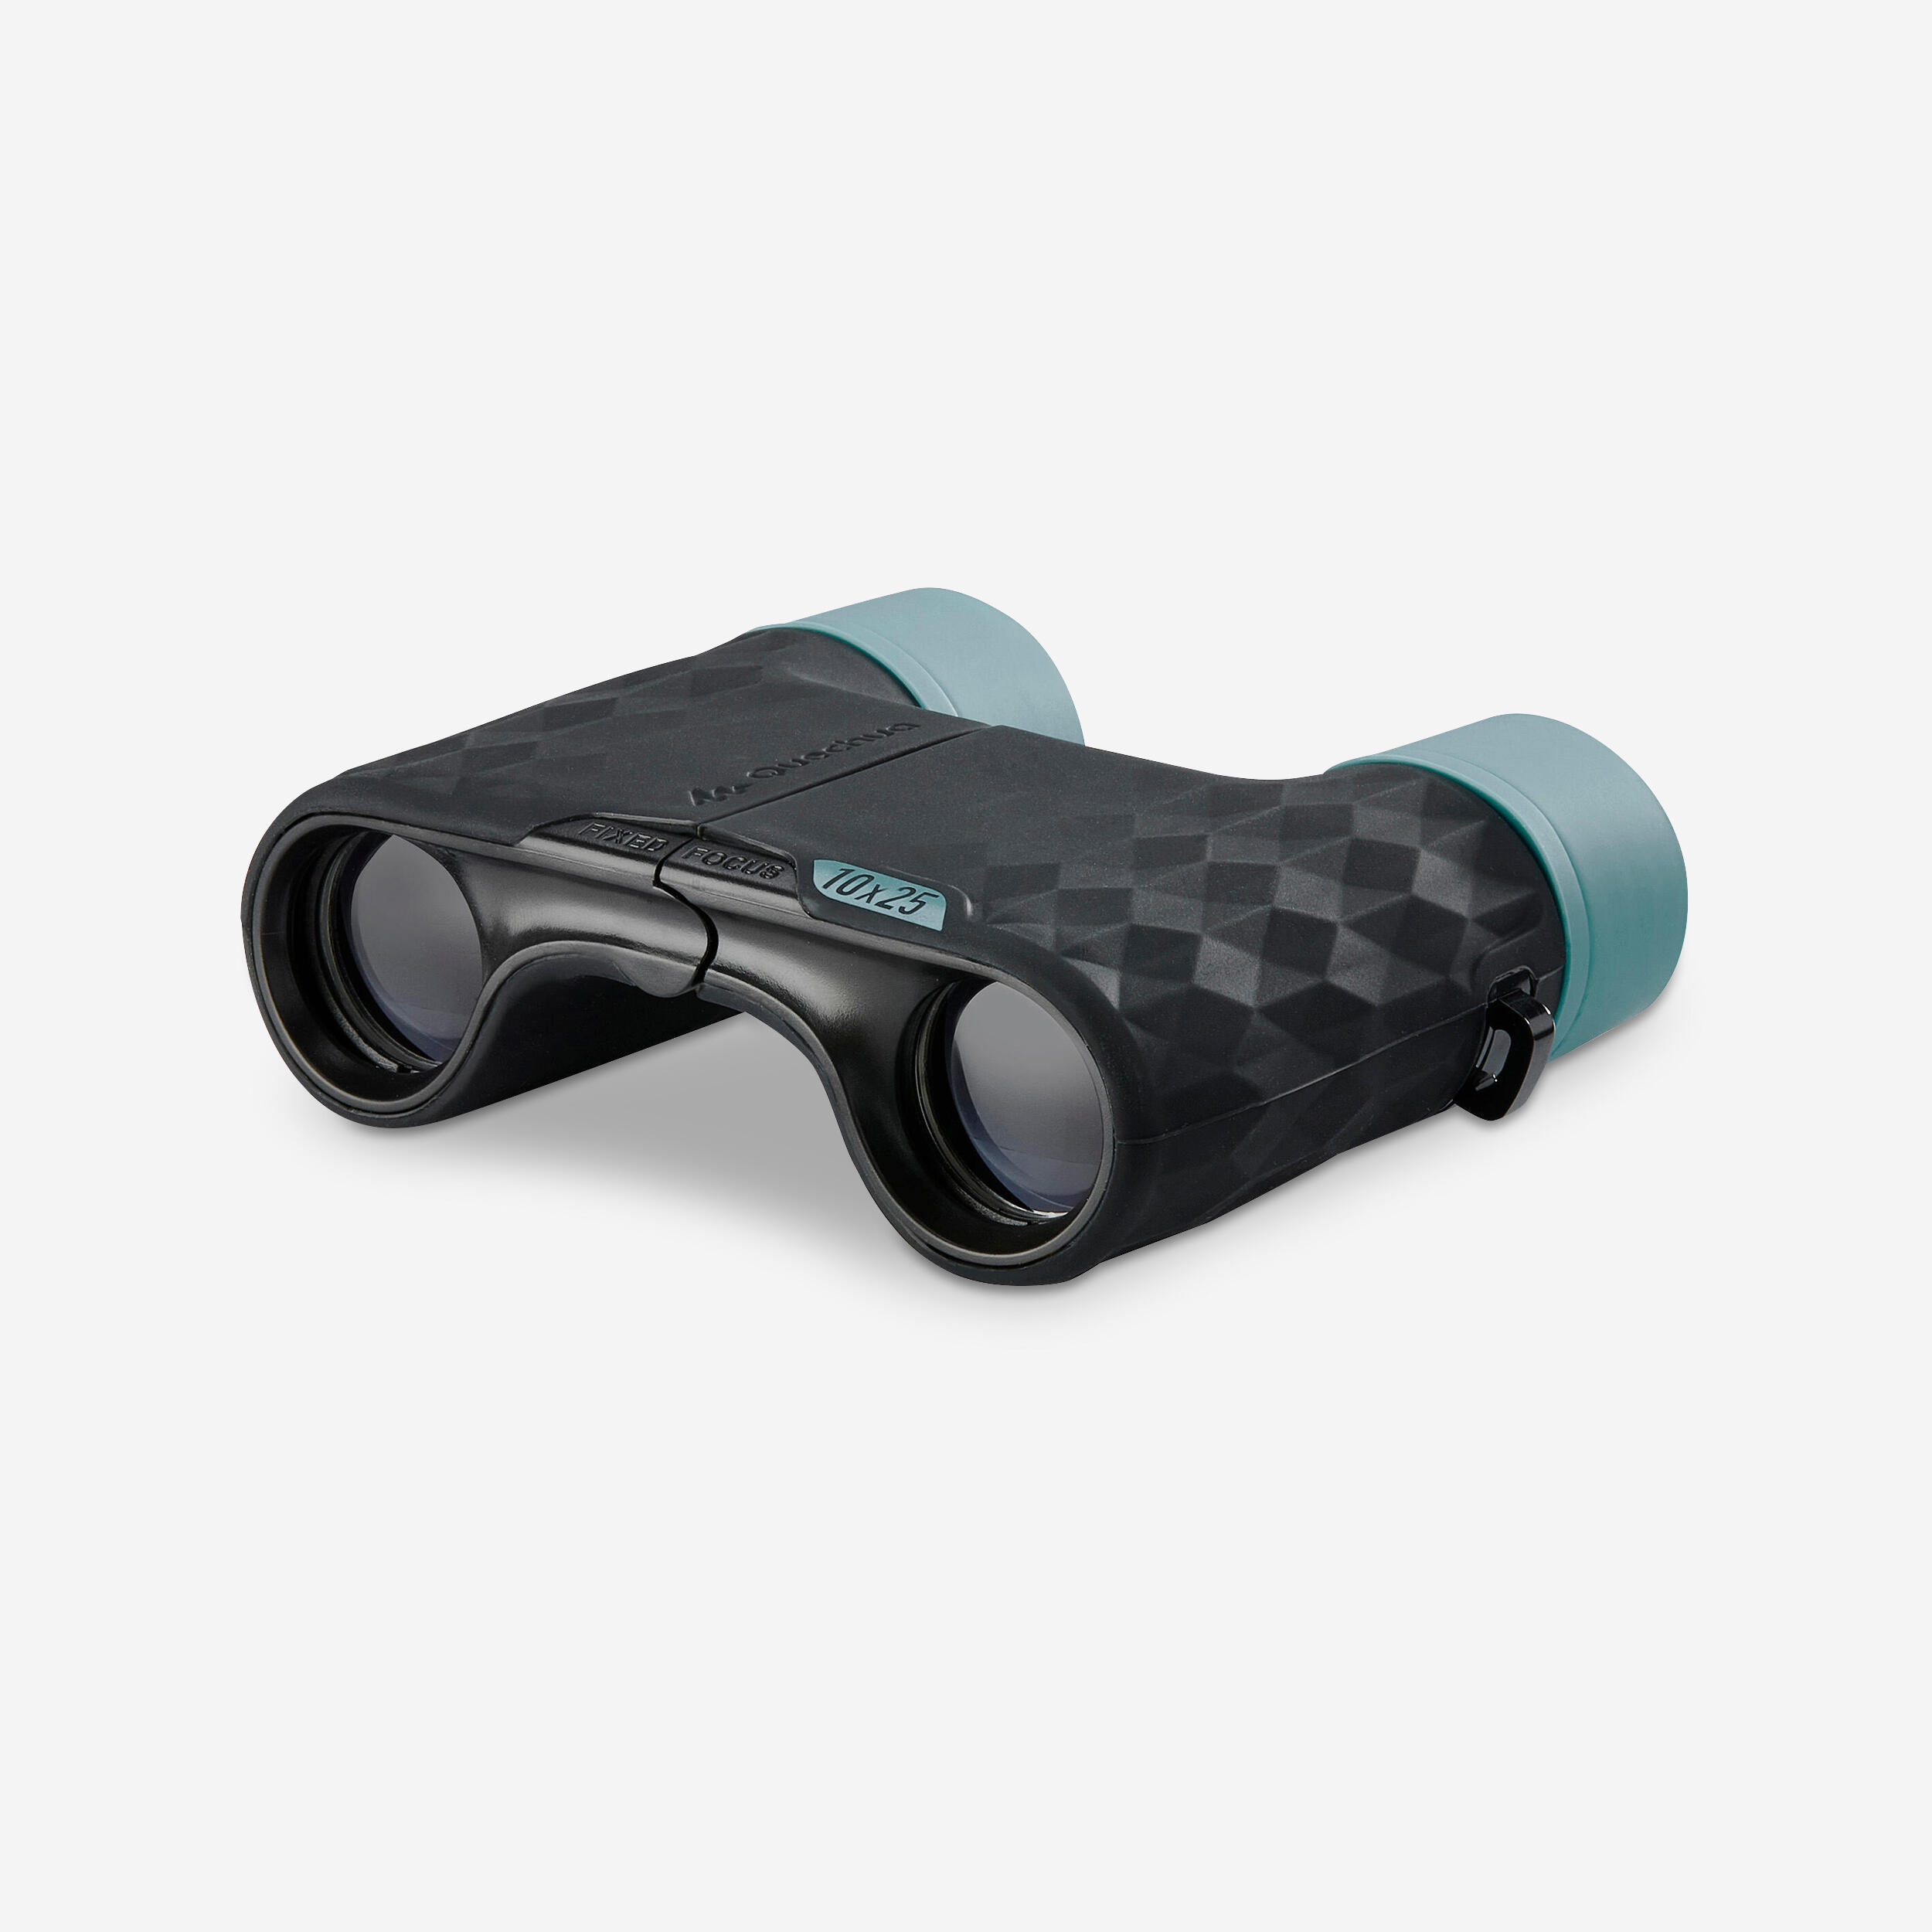 Adult's Hiking Focus-Free Binoculars MH B140 x10 Magnification - blue grey 1/8